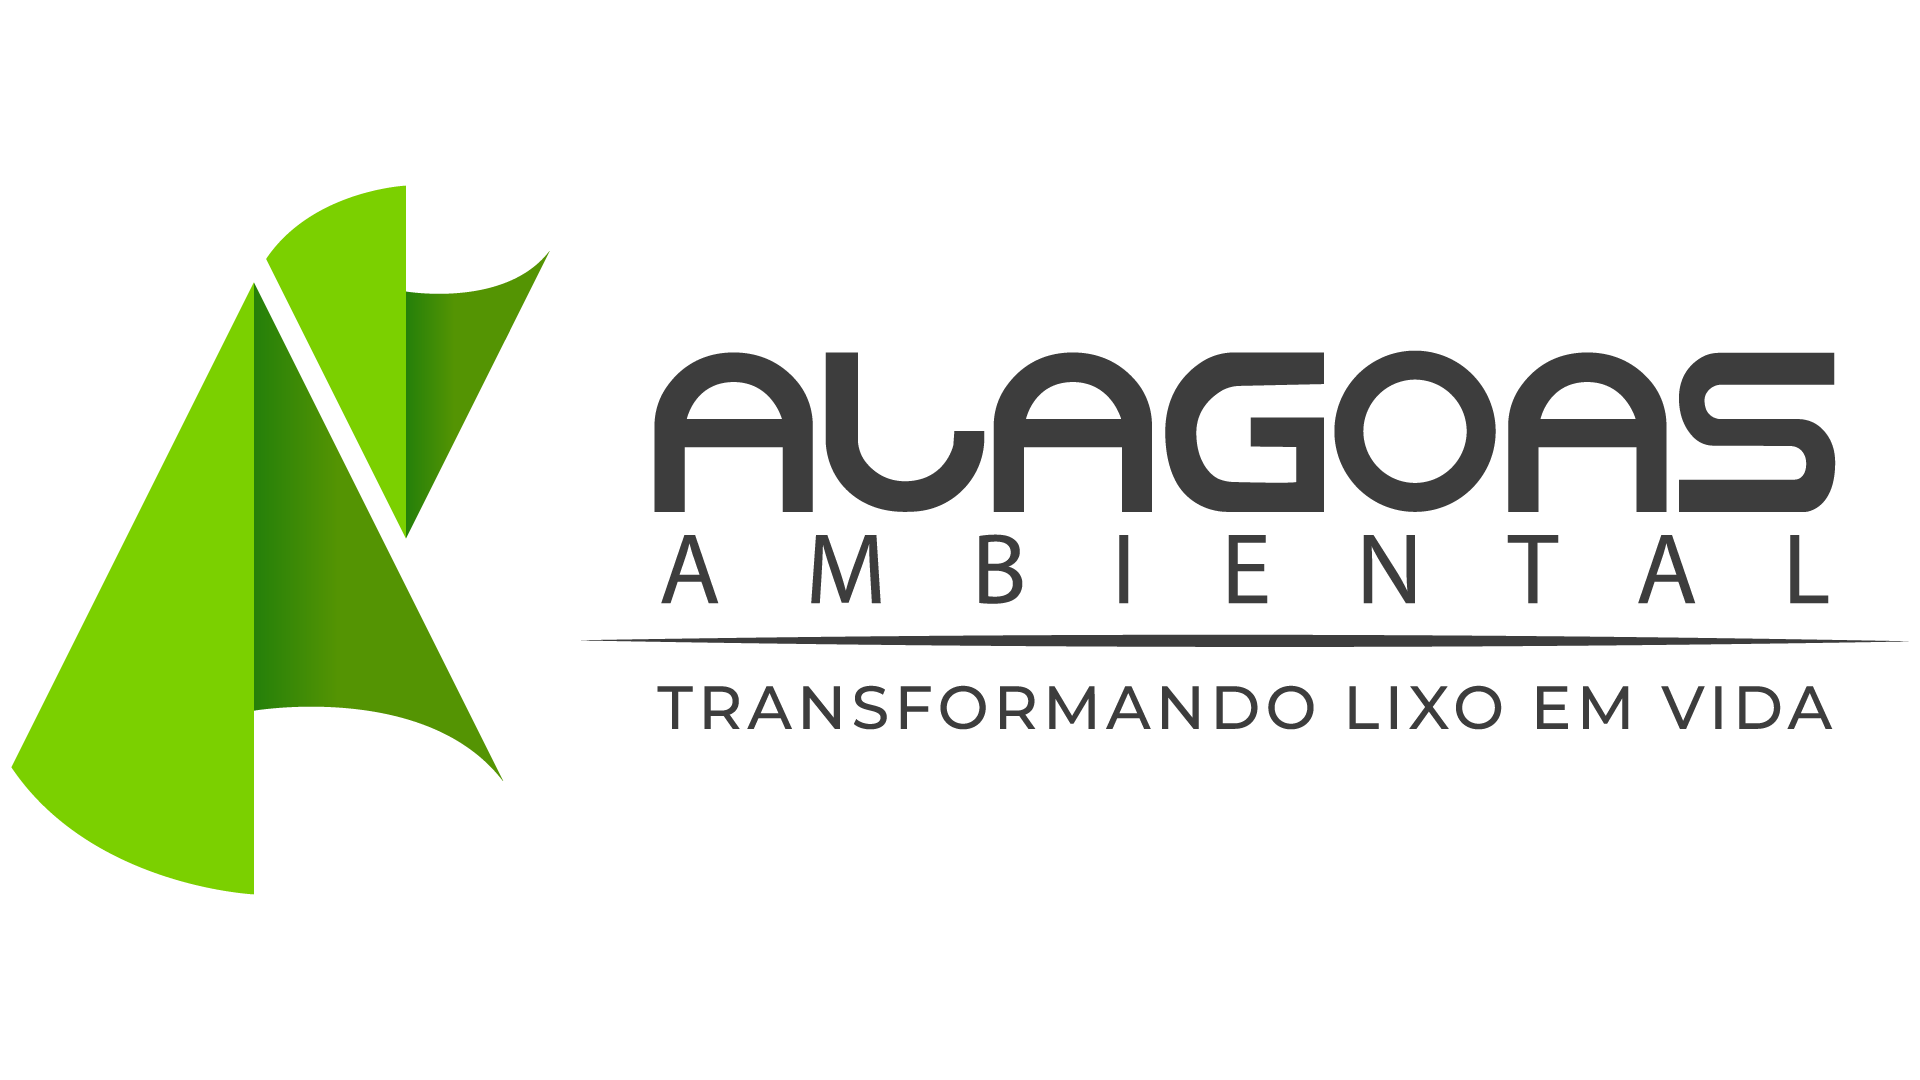 ALAGOAS-AMBIENTAL-LOGO-2